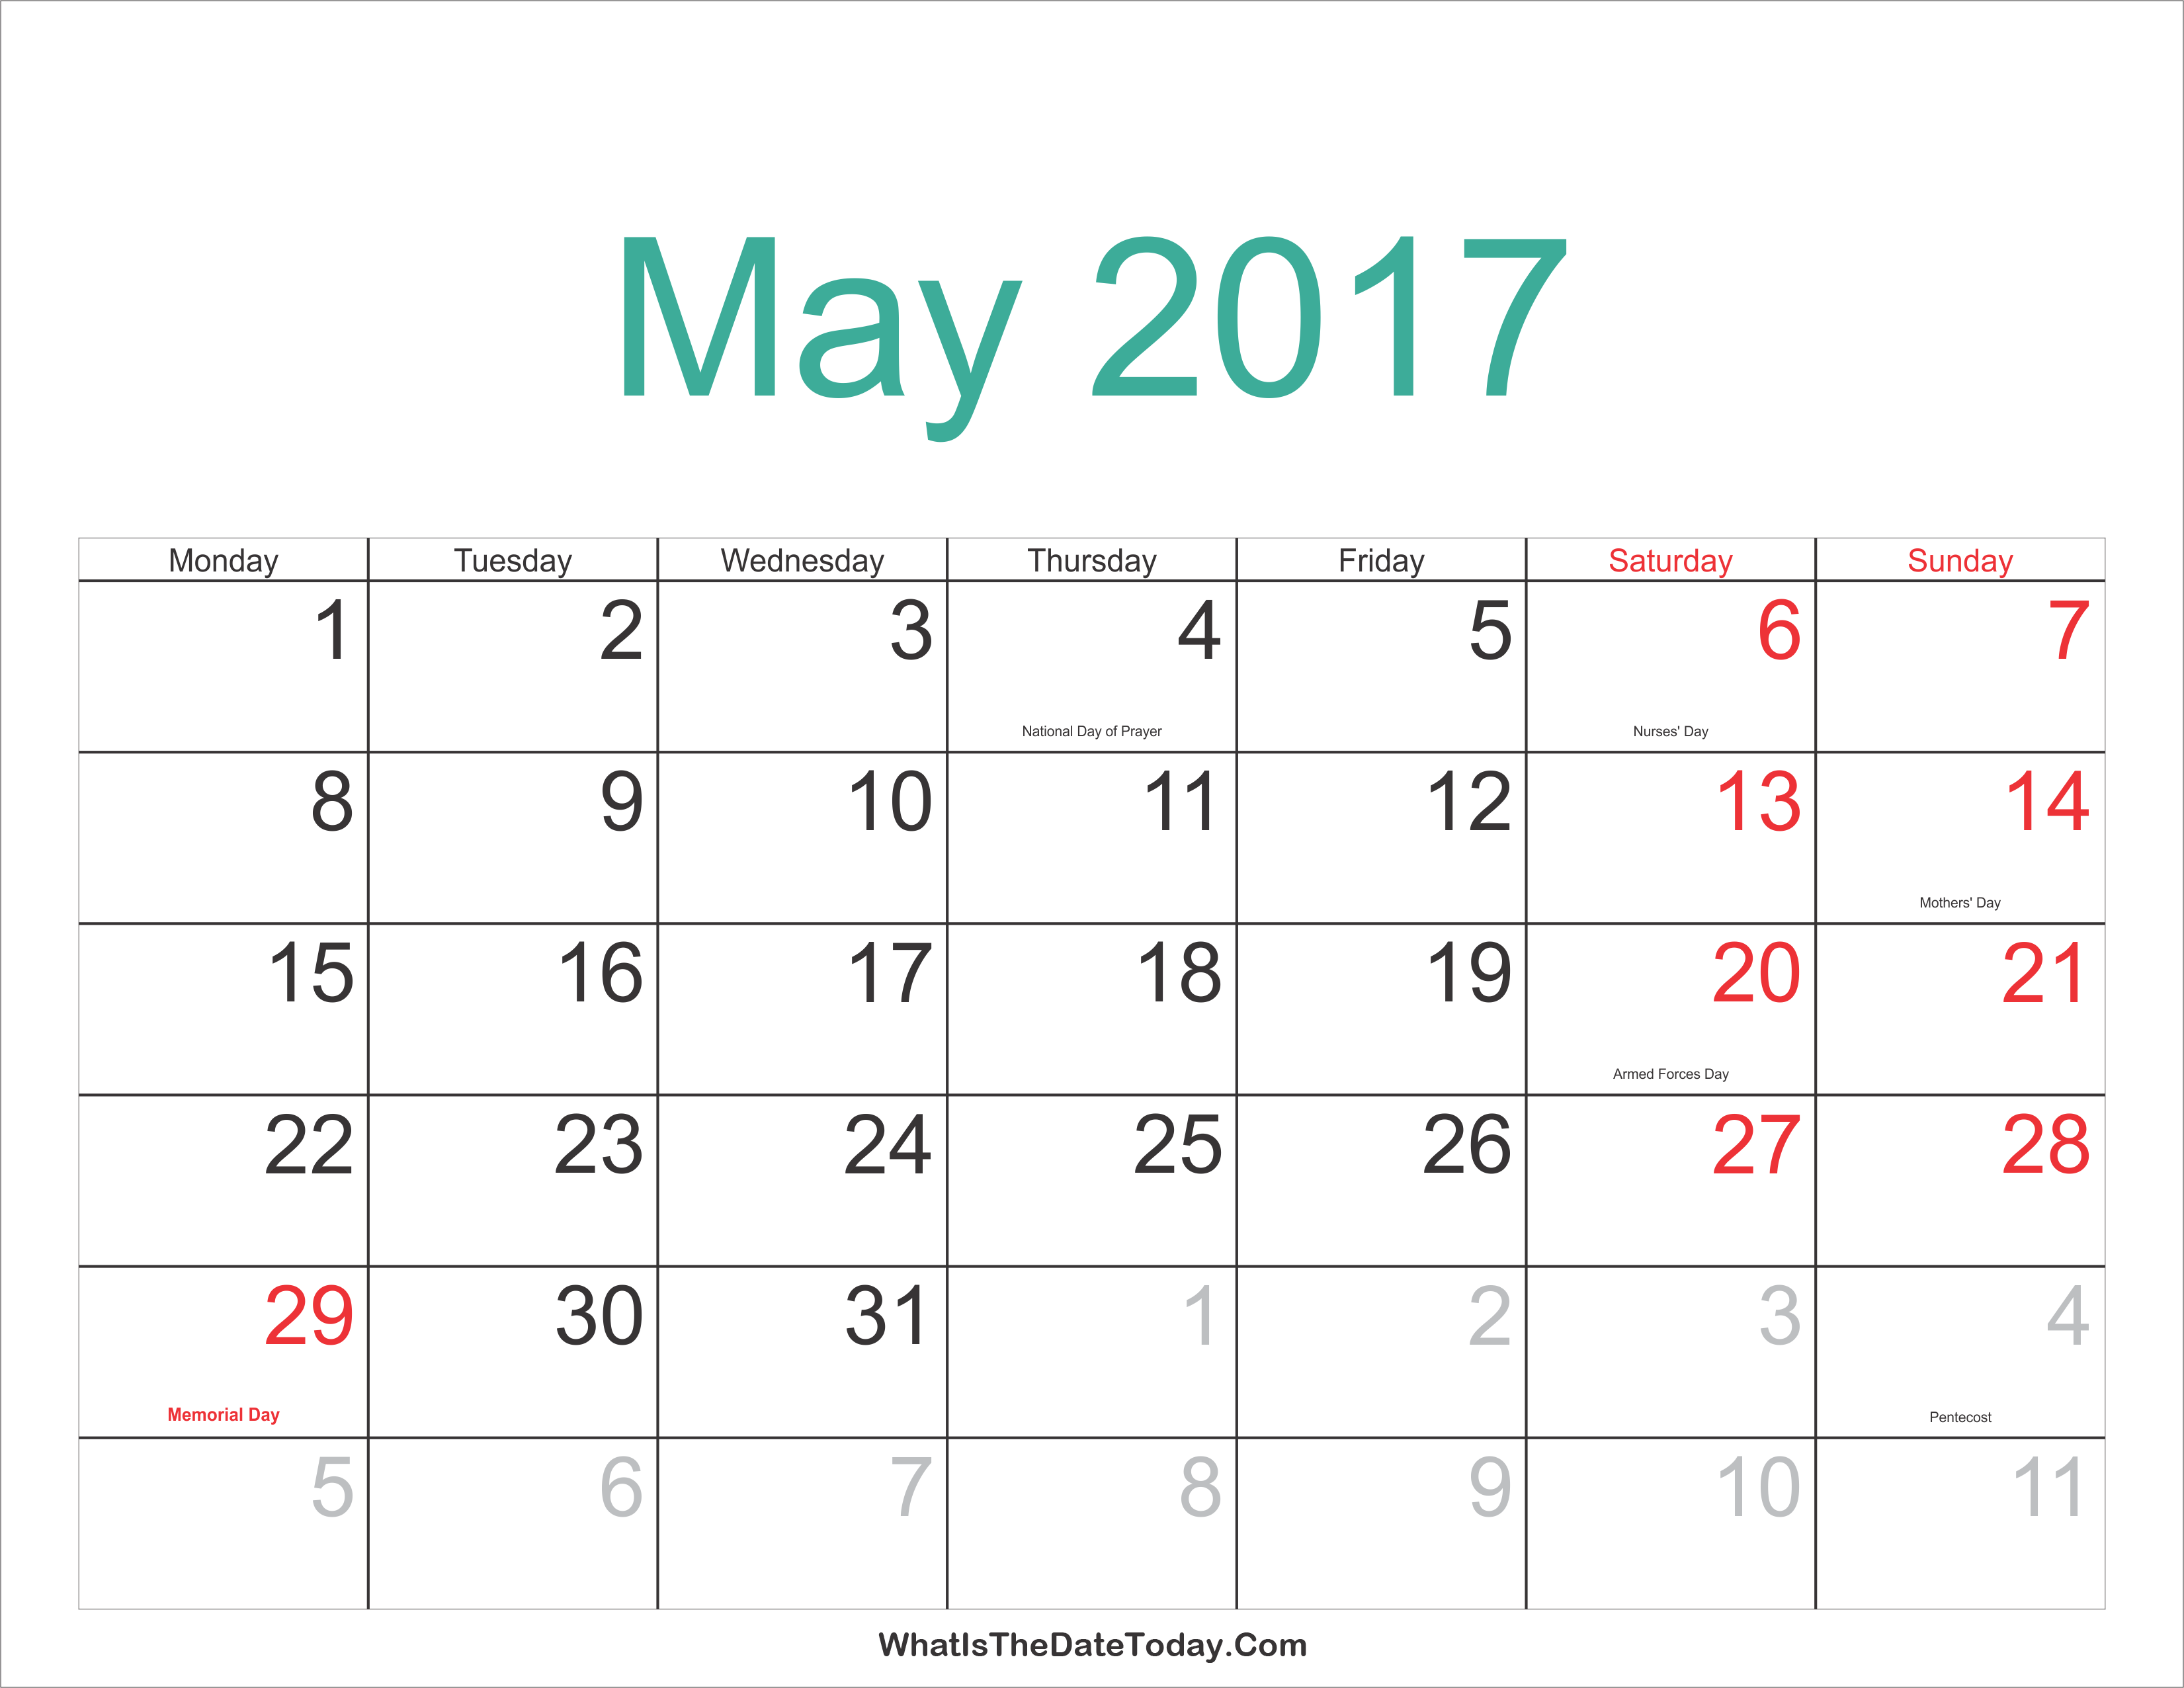 May 2017 Calendar Printable with Holidays | Whatisthedatetoday.Com